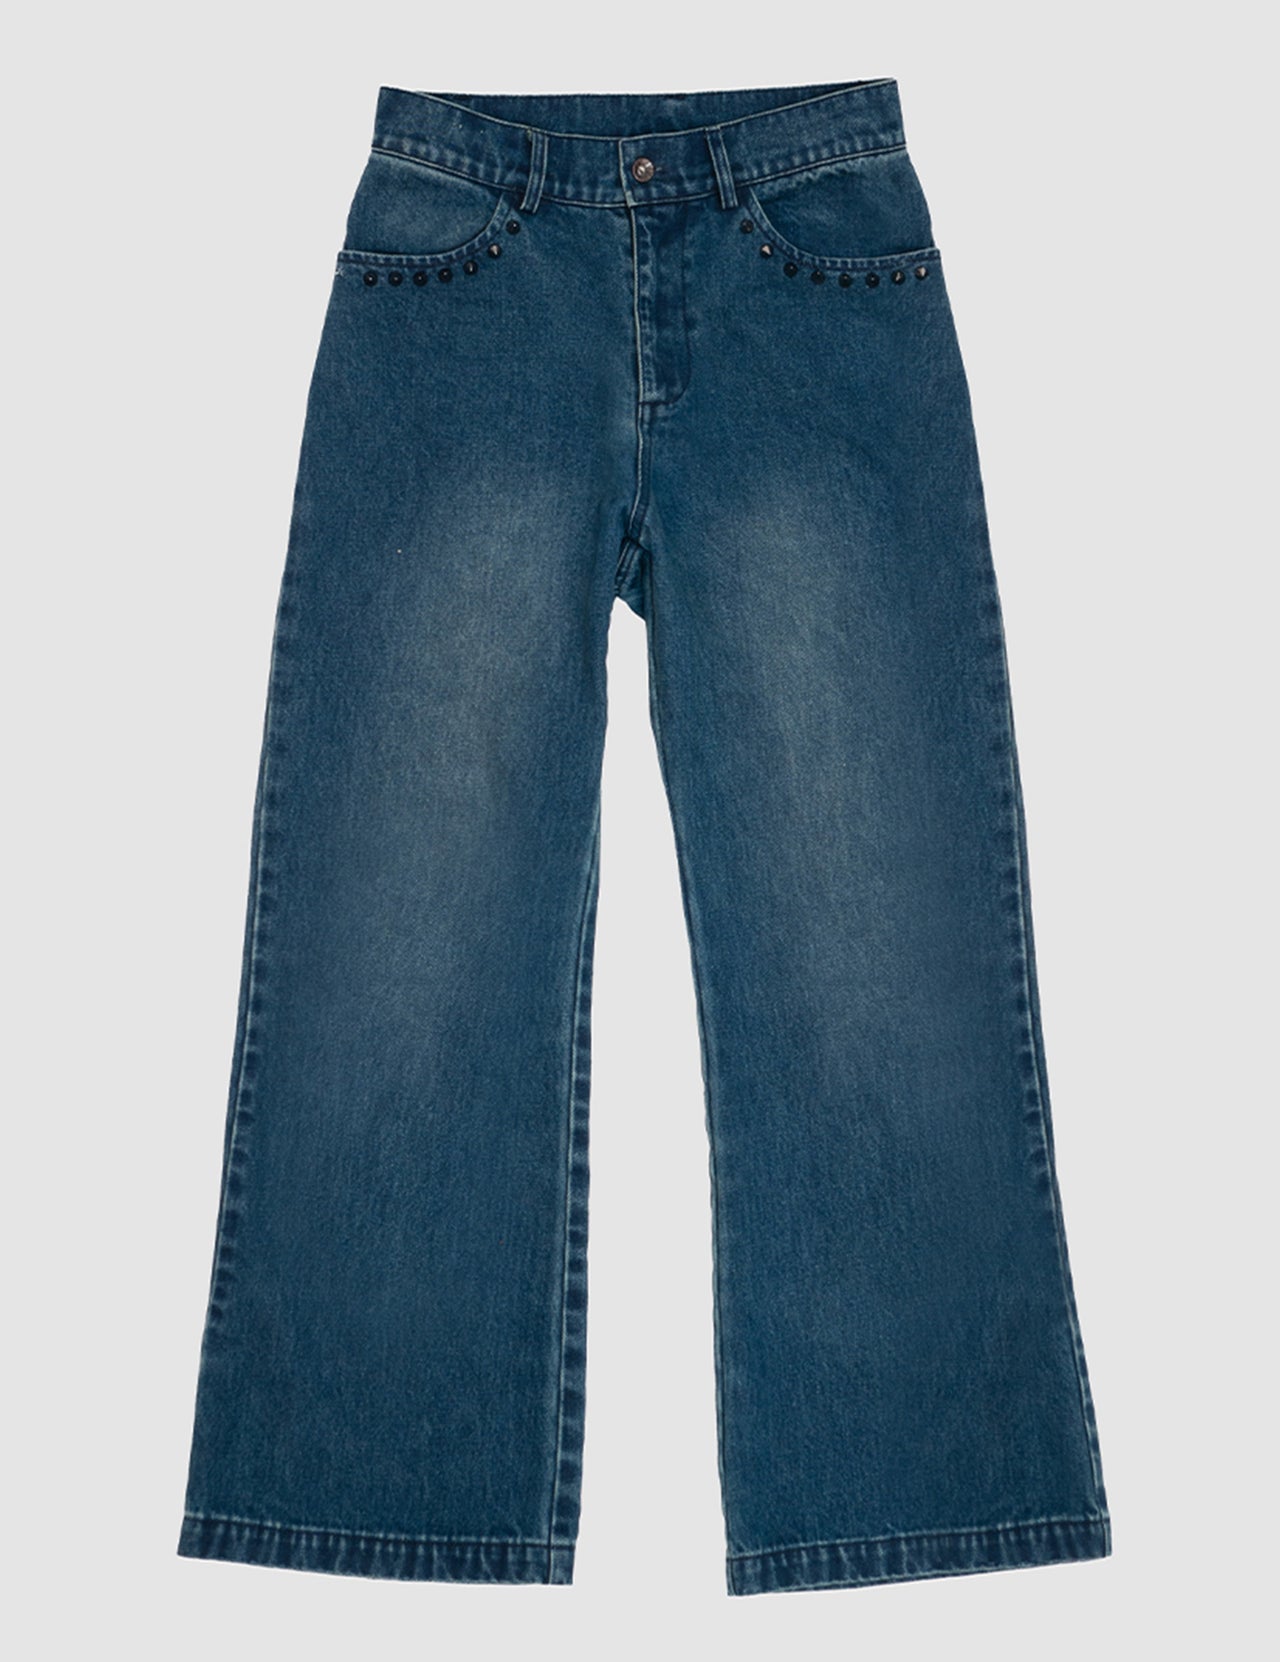 Studded Jeans (Indigo)